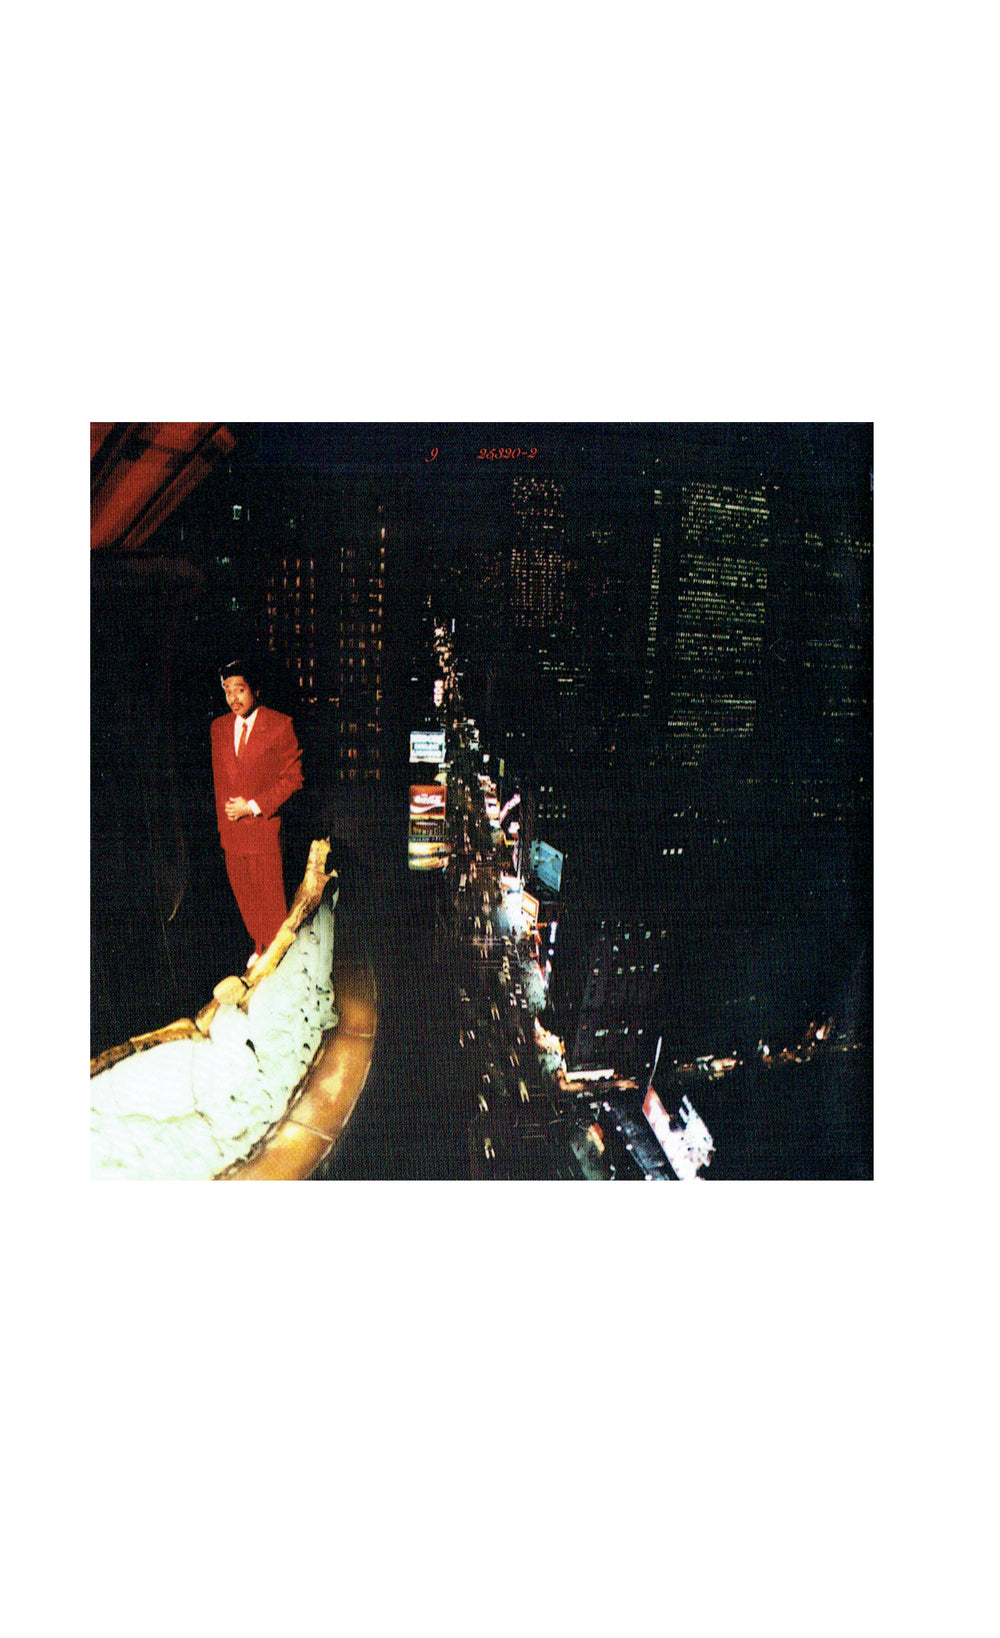 Morris Day Color Of Success CD Album Original 1985 US Prince